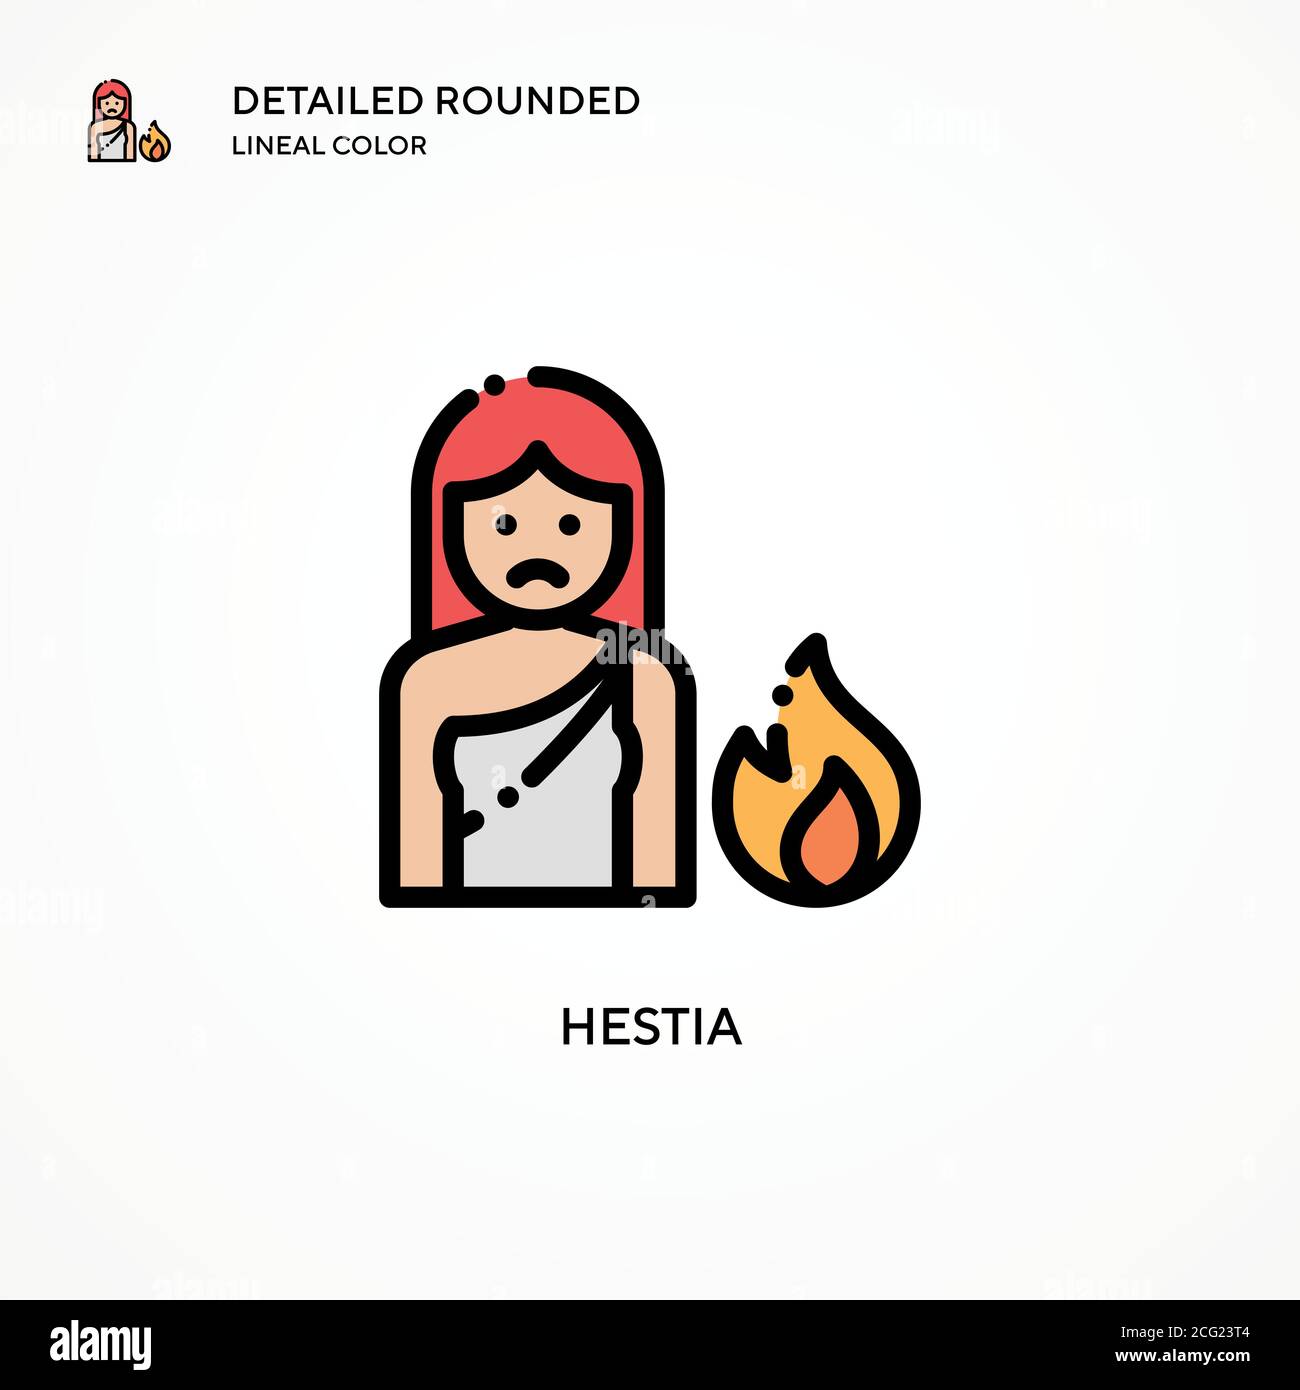 Hestia-Vektor-Symbol. Moderne Vektorgrafik Konzepte. Einfach zu bearbeiten und anzupassen. Stock Vektor